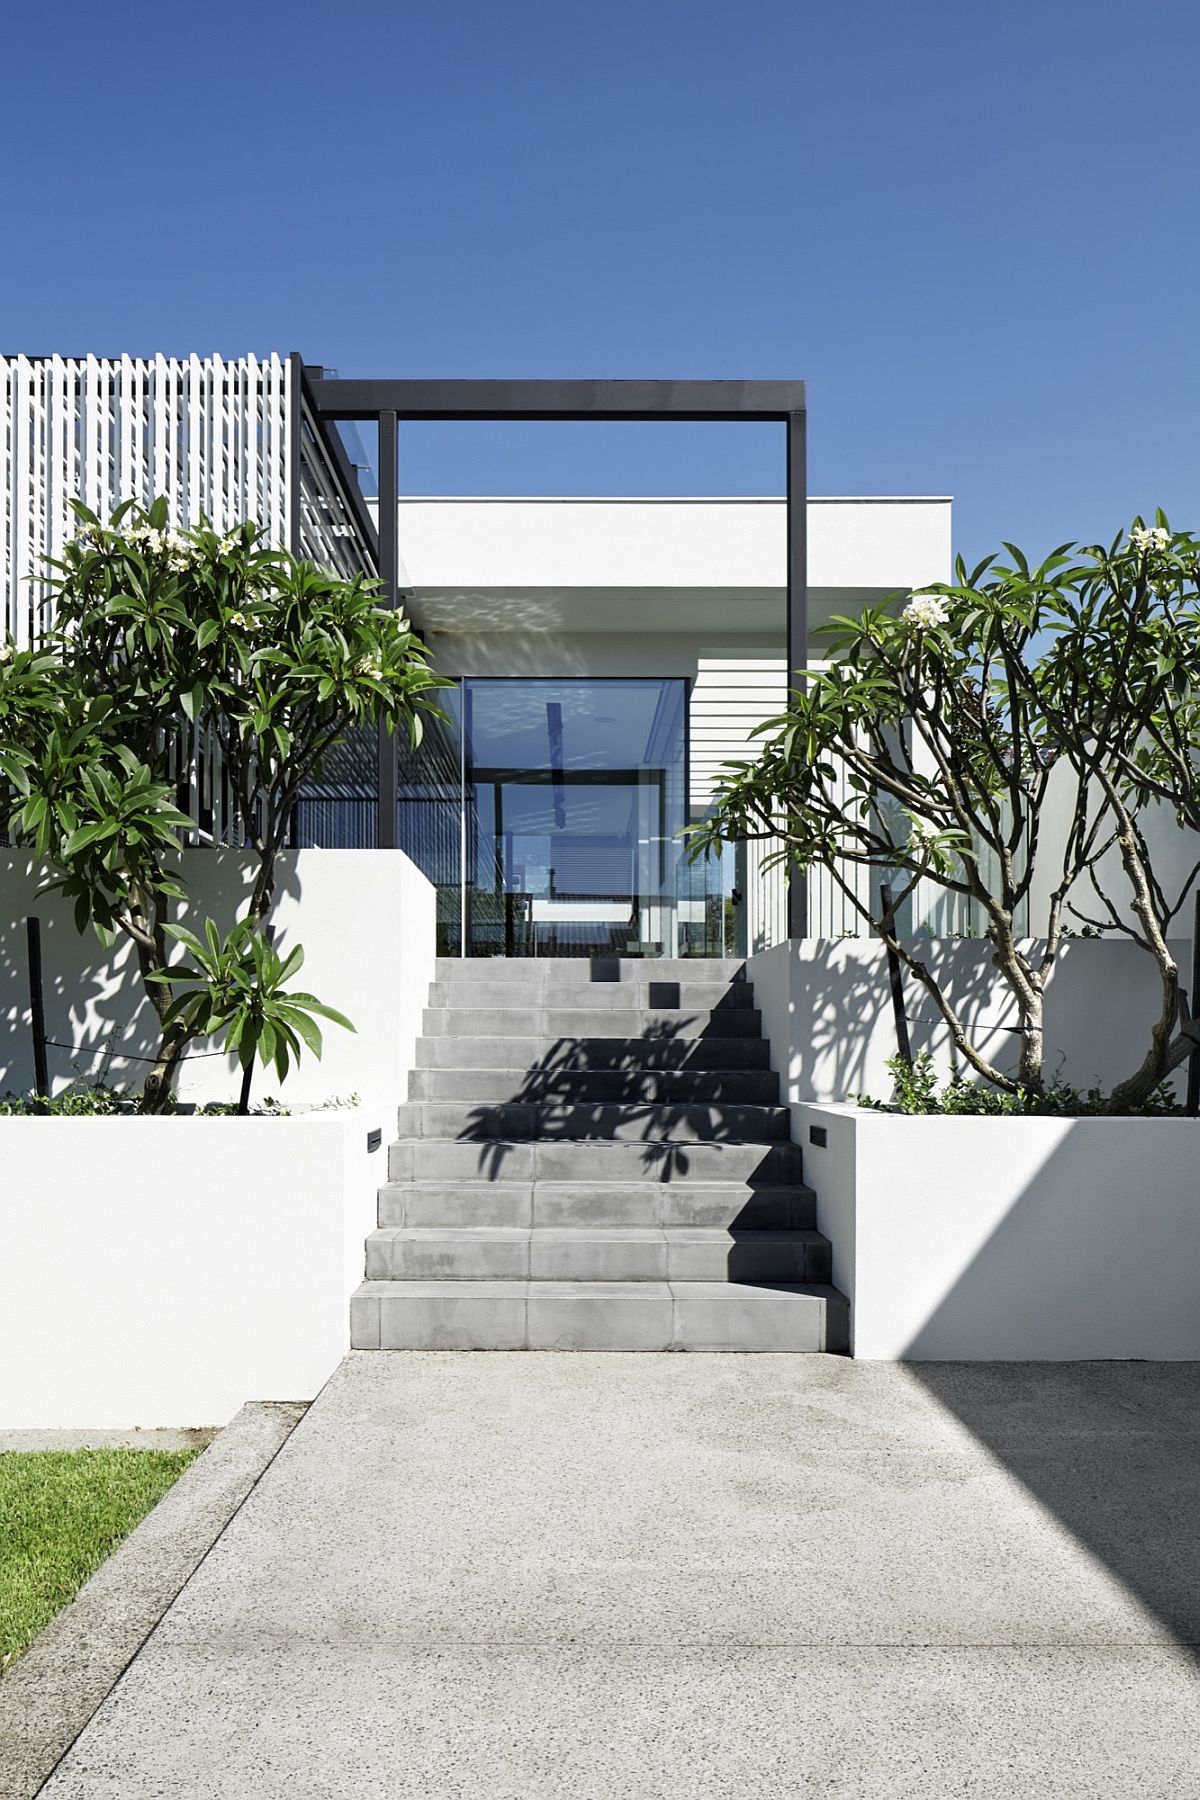 Passive solar design of Gallery House